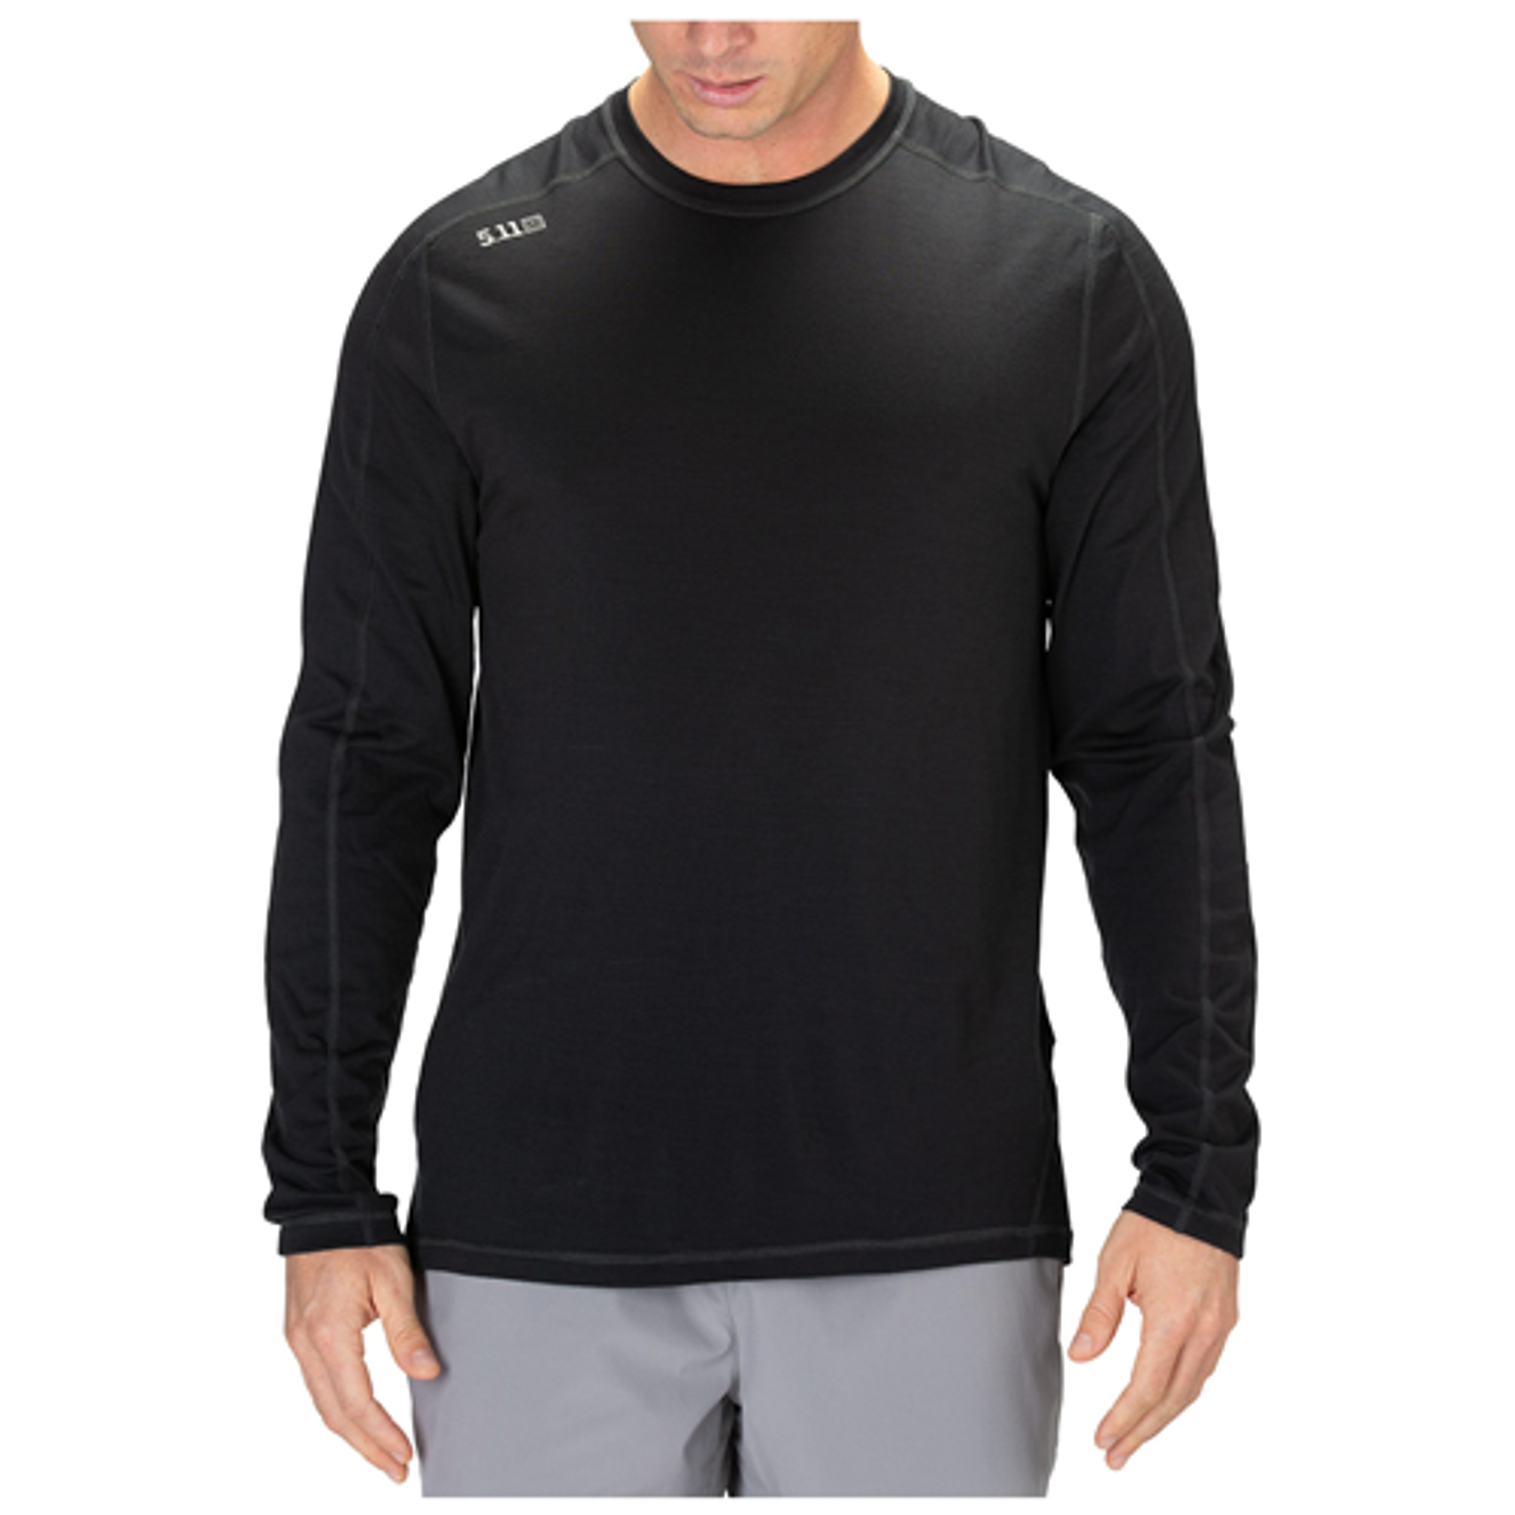 Range Ready Merino Wool Long Sleeve Shirt - KR5-40164019XL